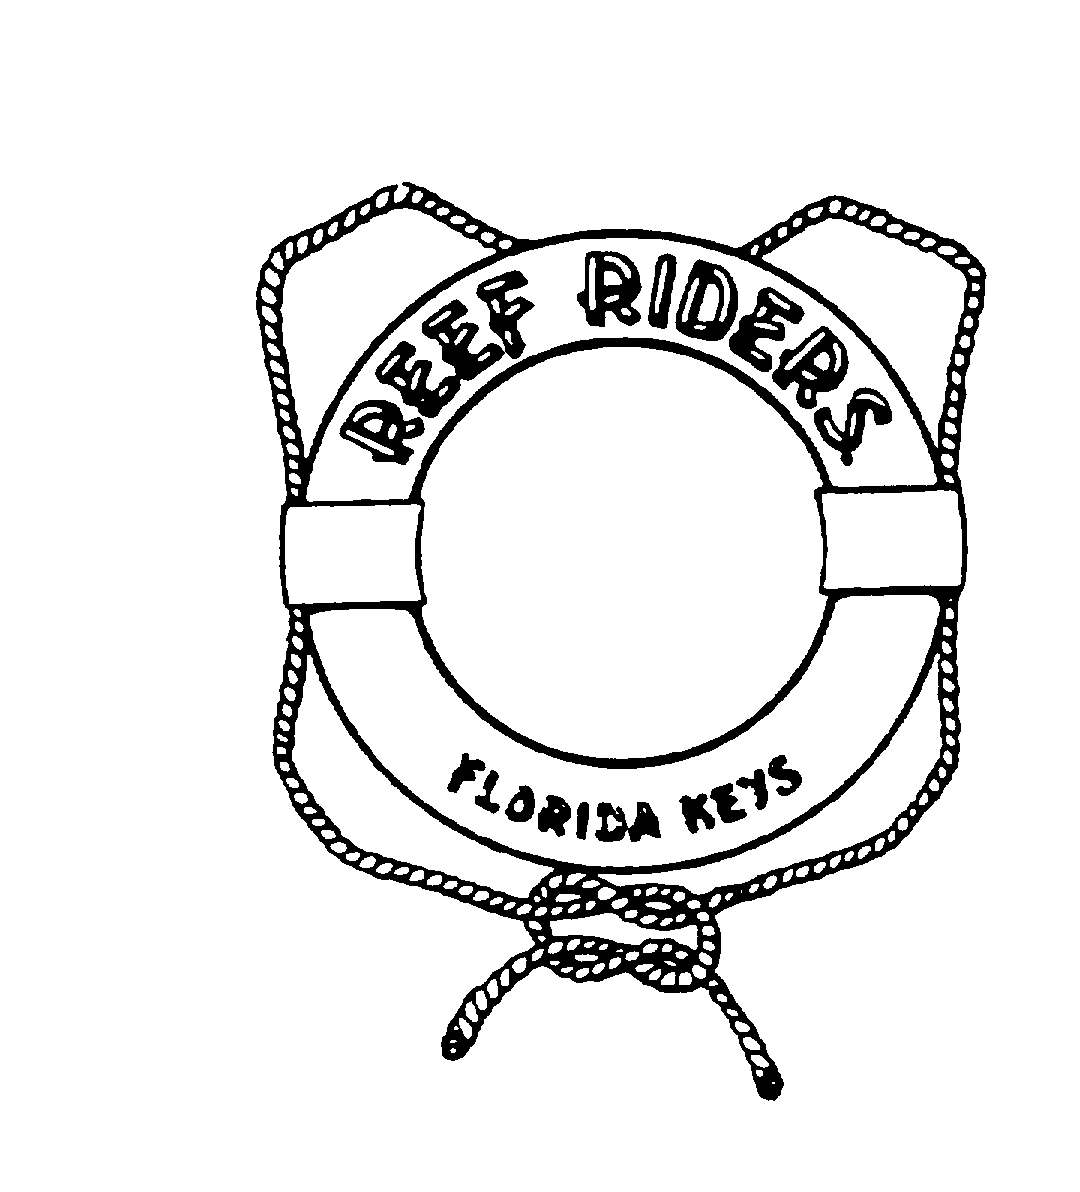  REEF RIDERS FLORIDA KEYS